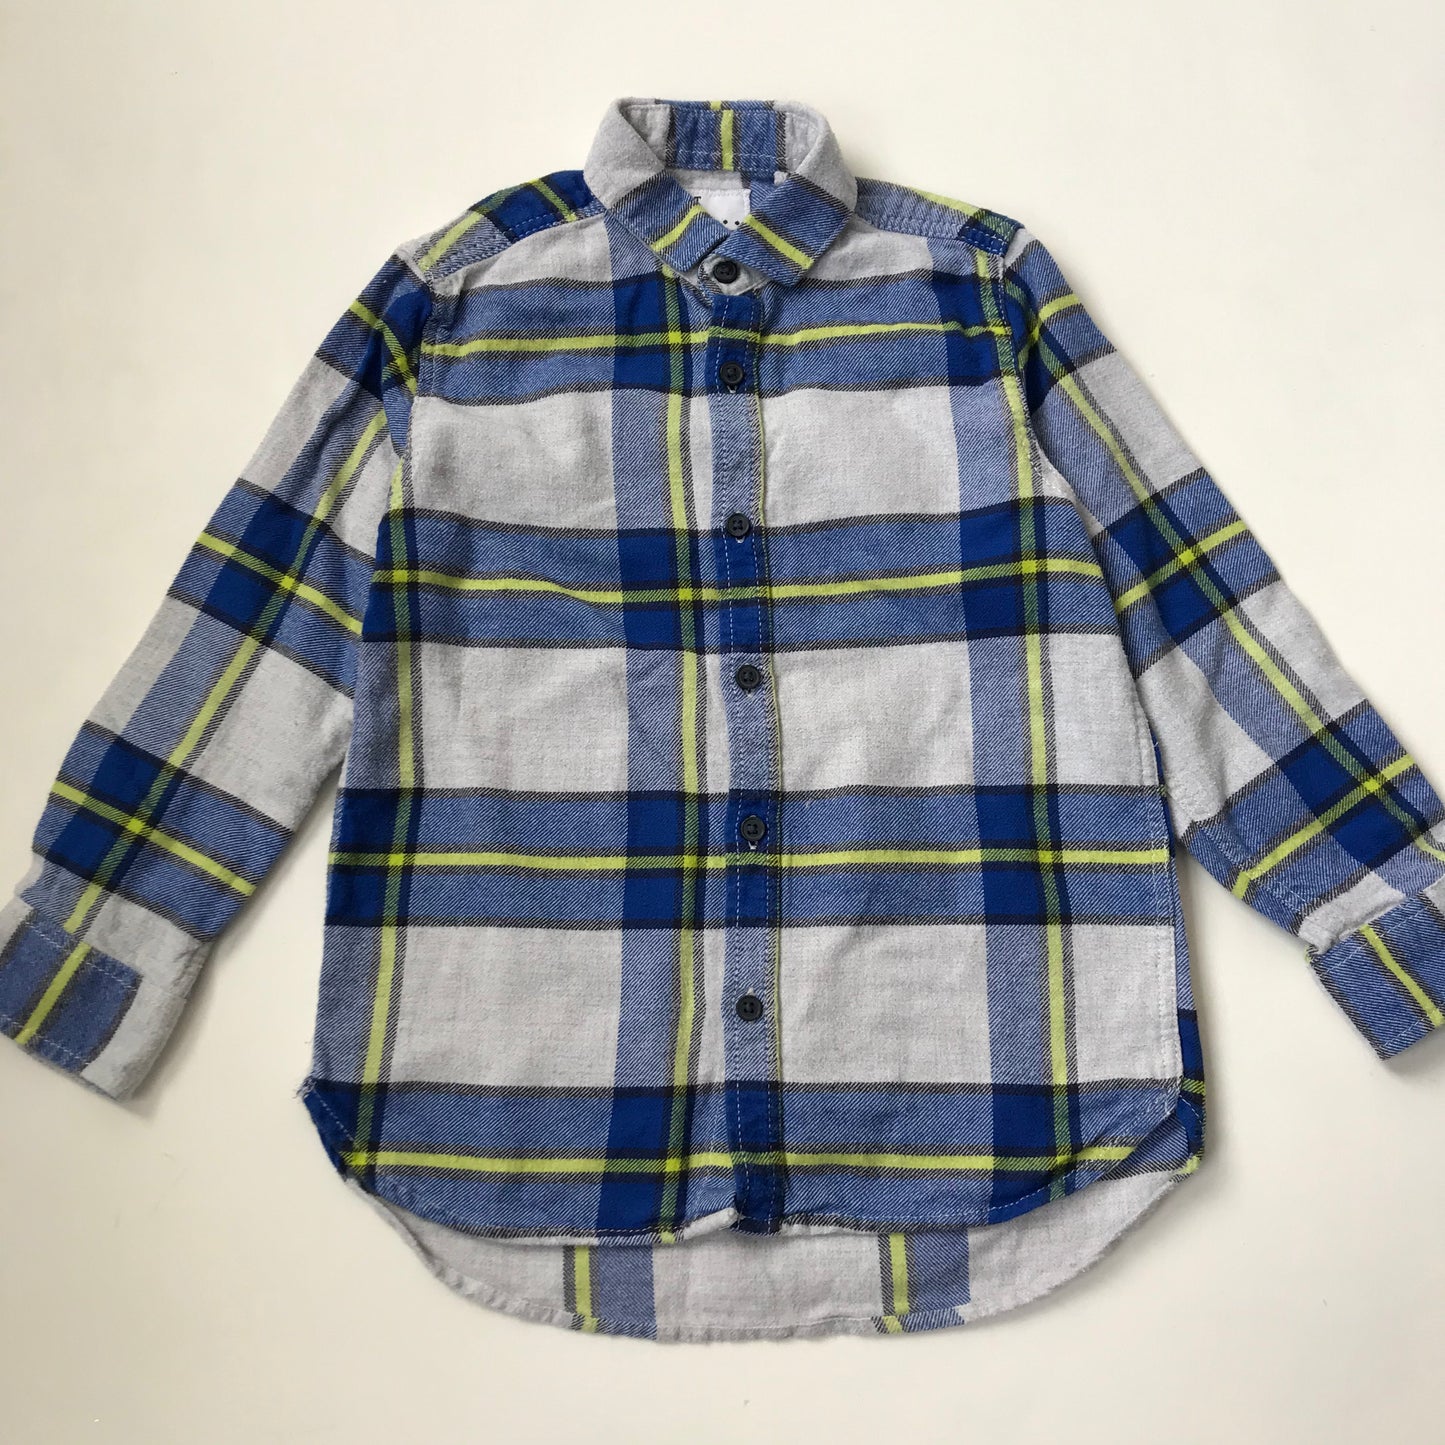 Shirt - Blue & Yellow Check - Age 5